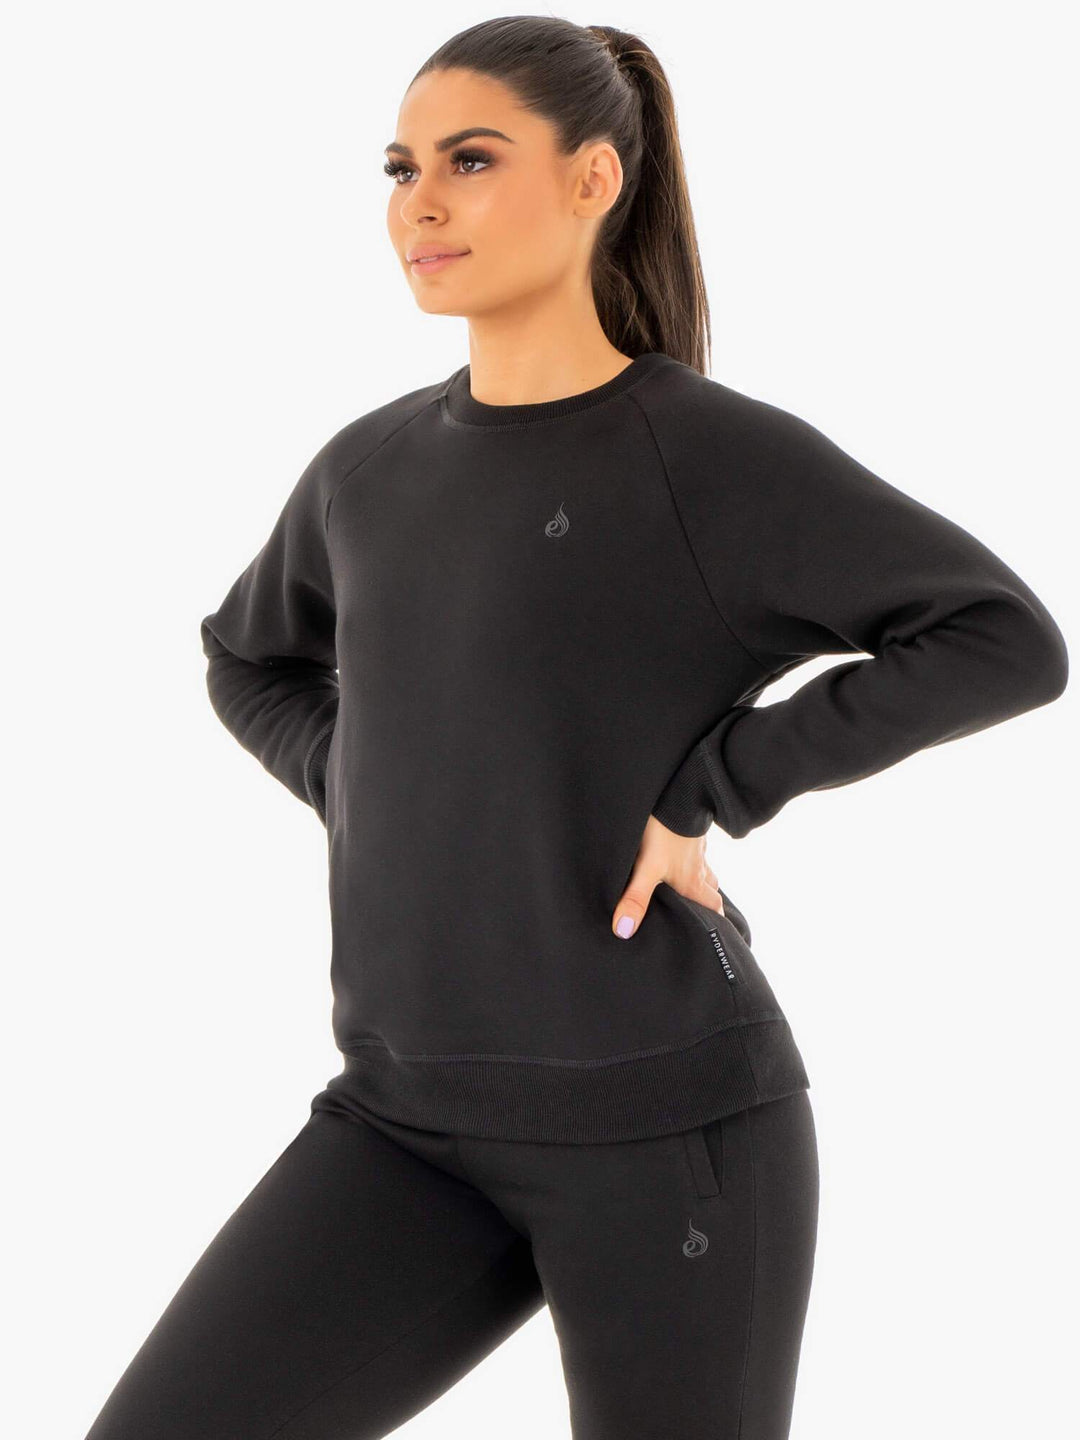 Adapt Boyfriend Sweater - Black Clothing Ryderwear 